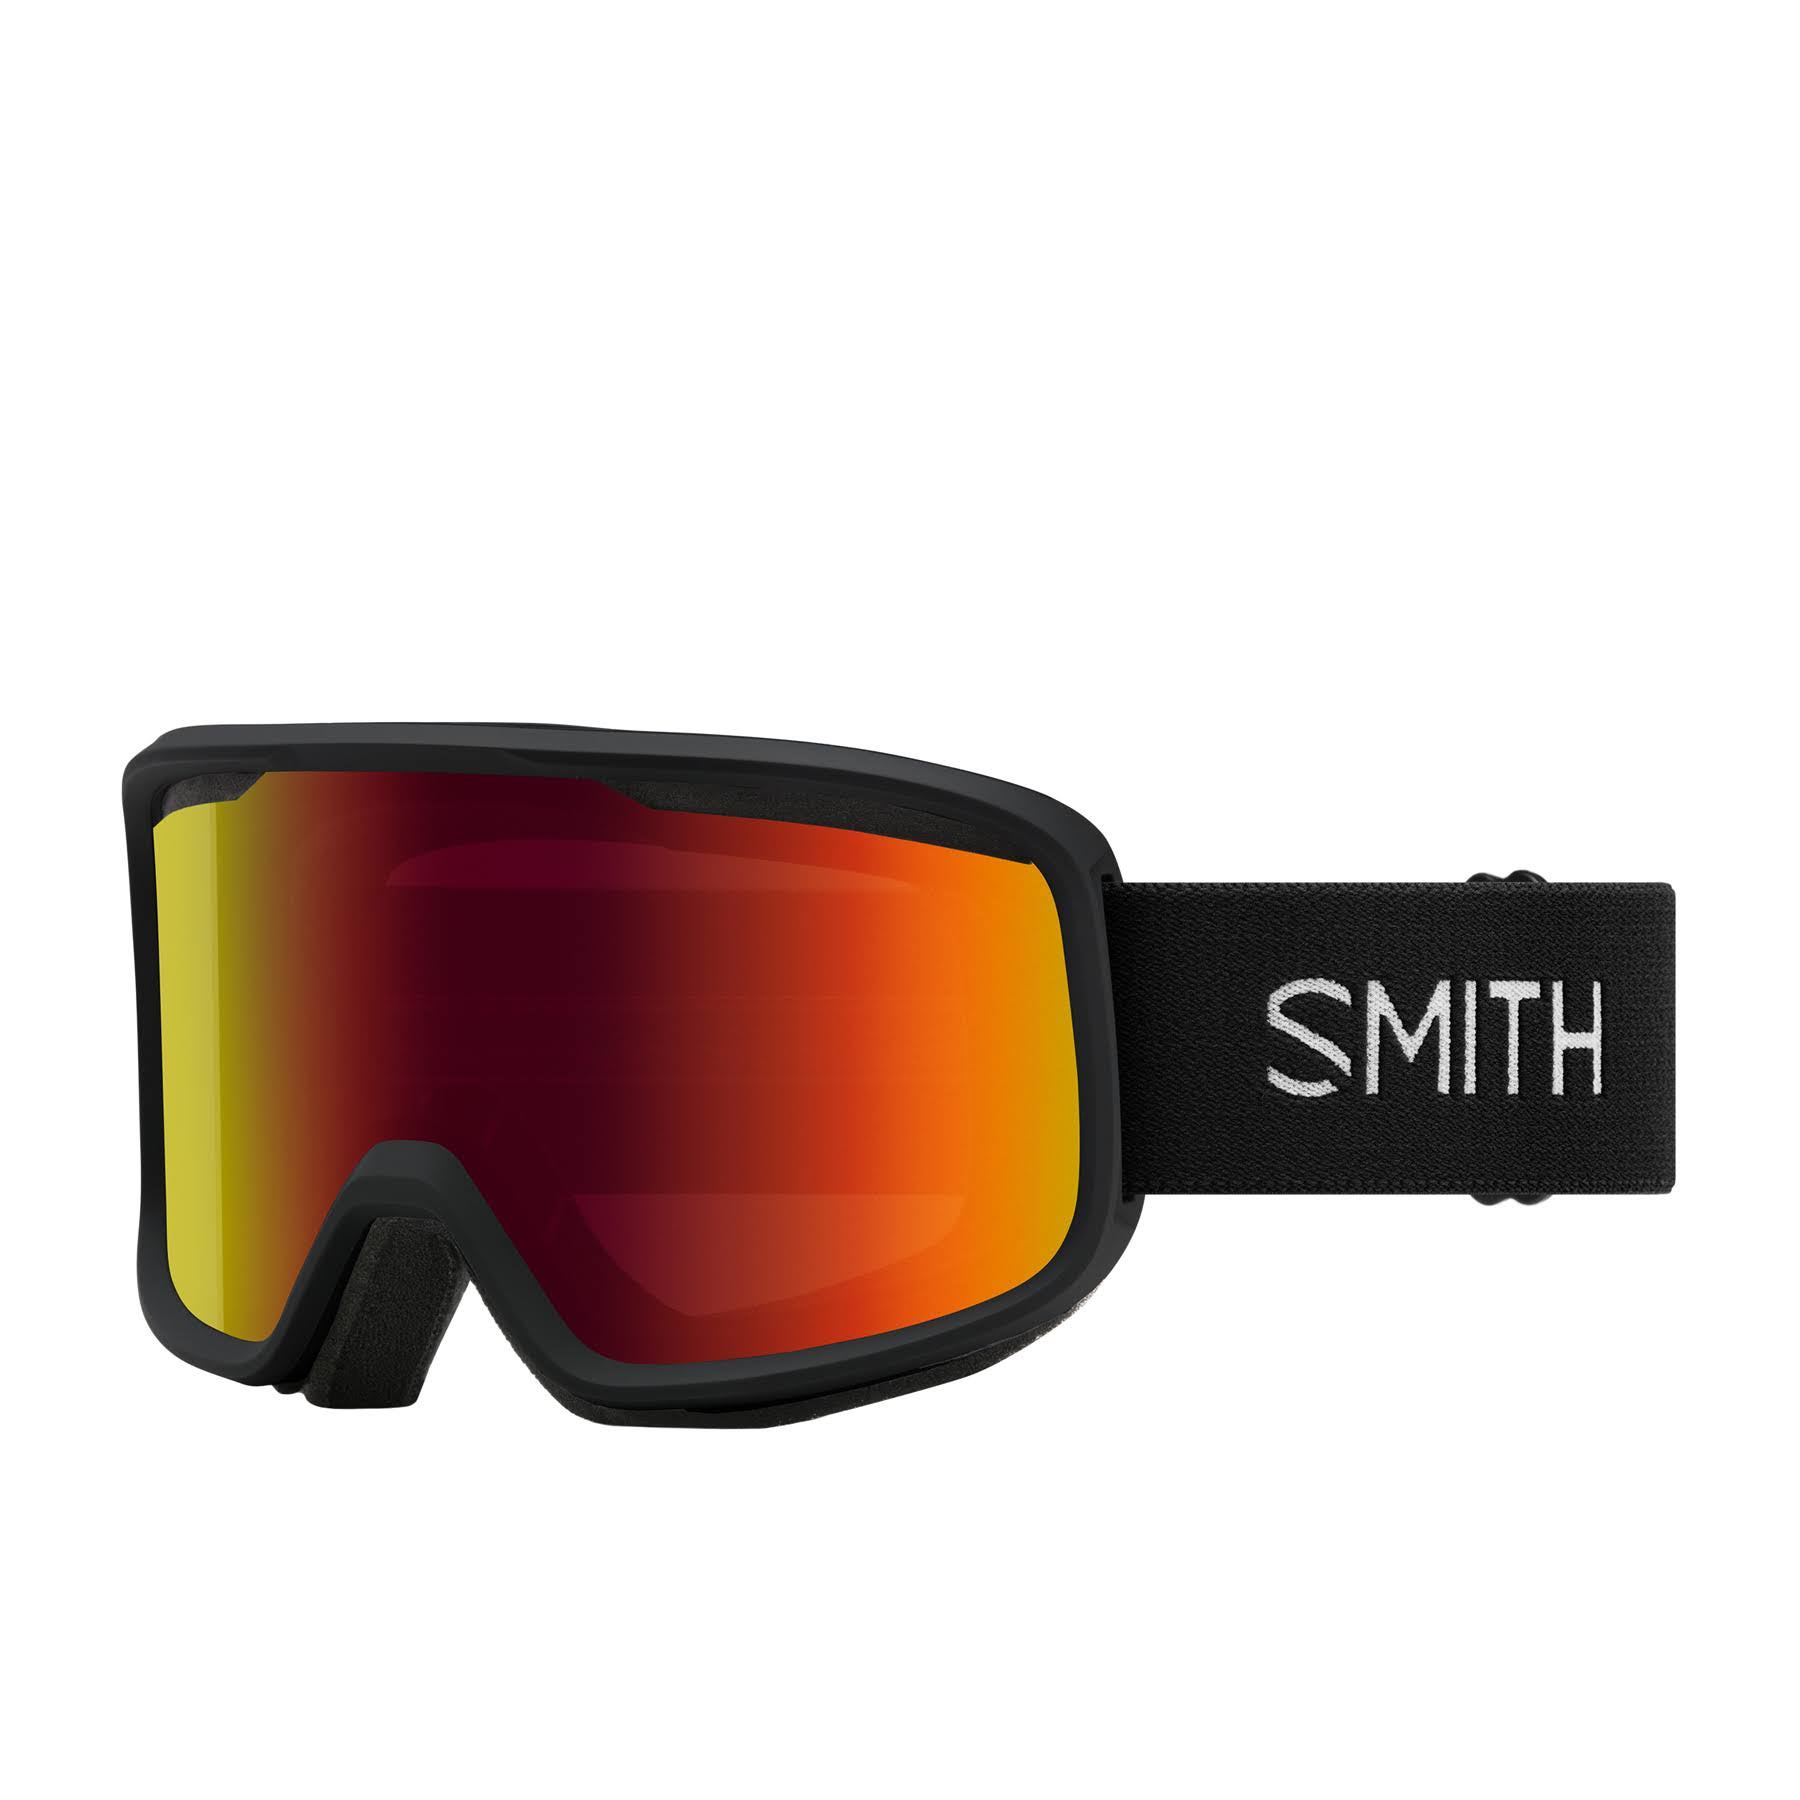 Smith Frontier Snow Goggles - Black Red Sol-X Mirror